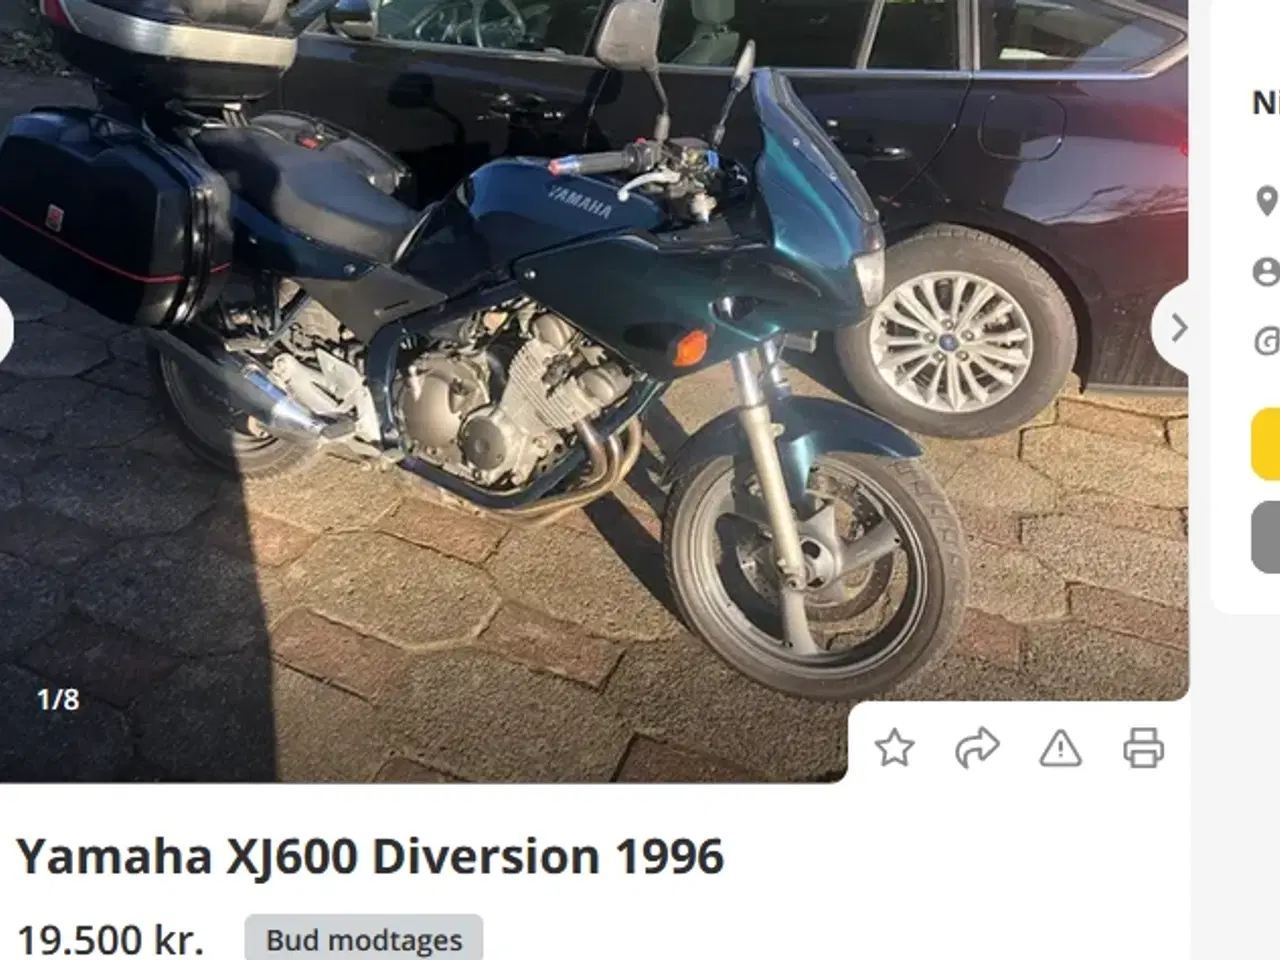 Billede 13 - Billig men velholdt Yamaha XJ600